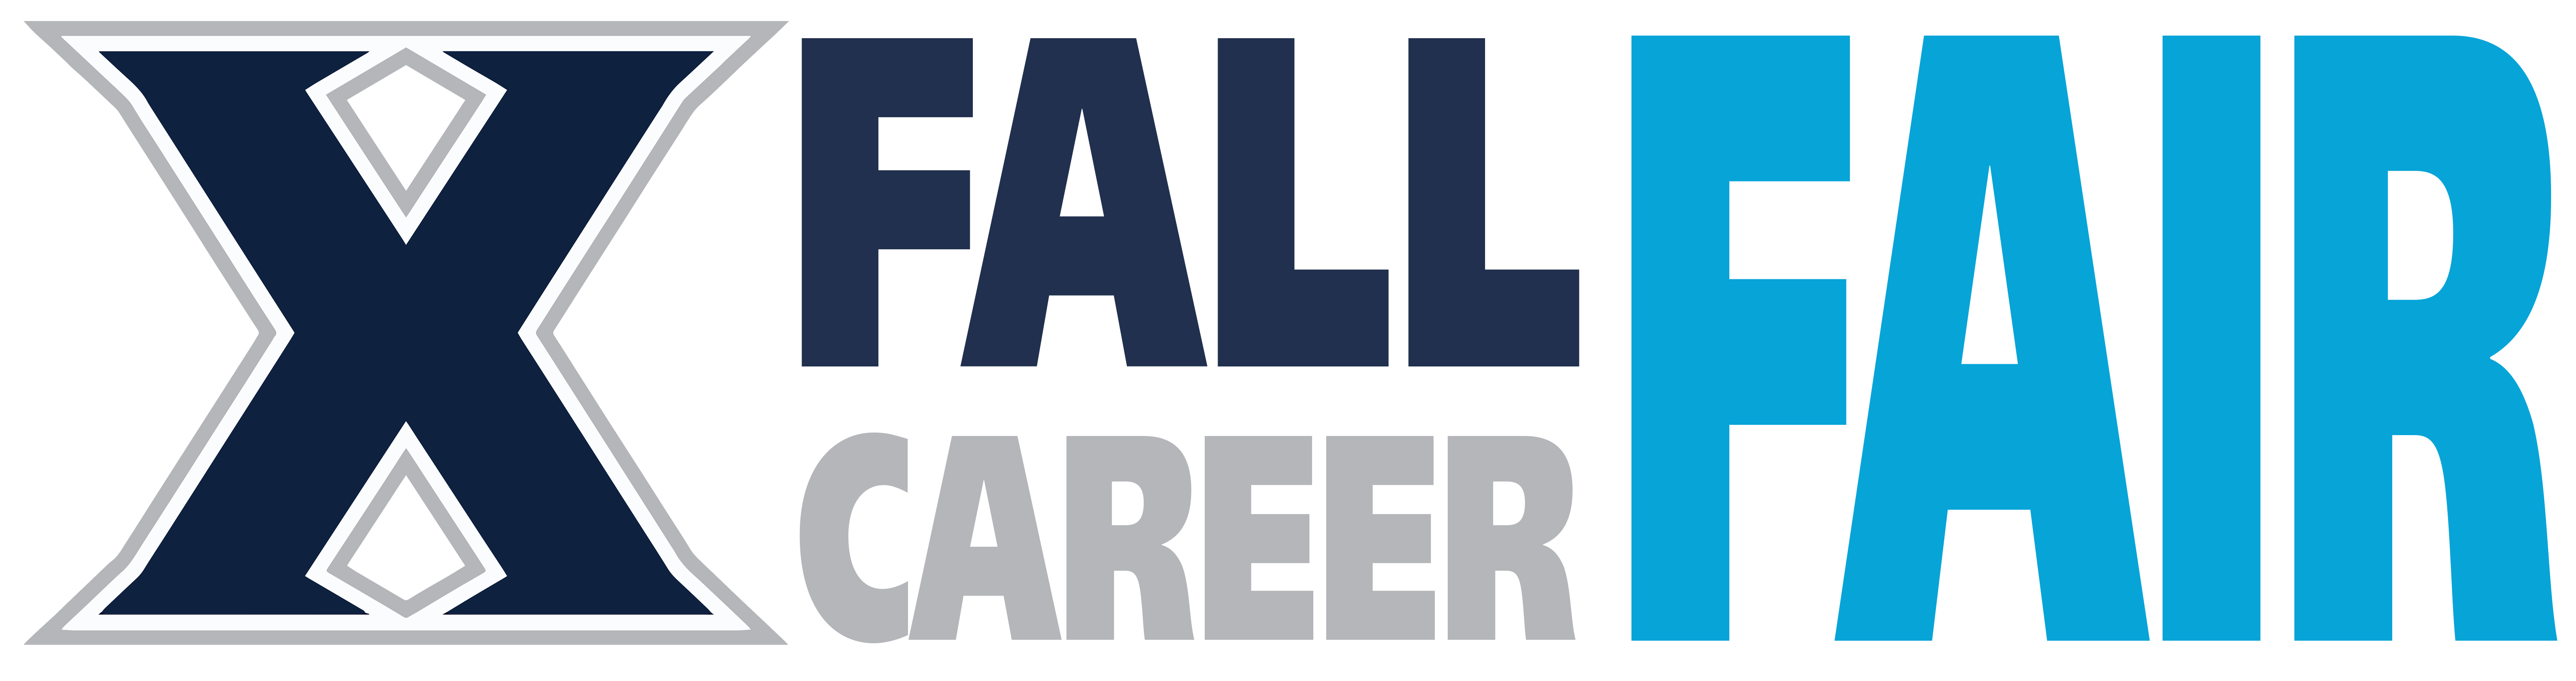 Xavier Fall Career Fair logo